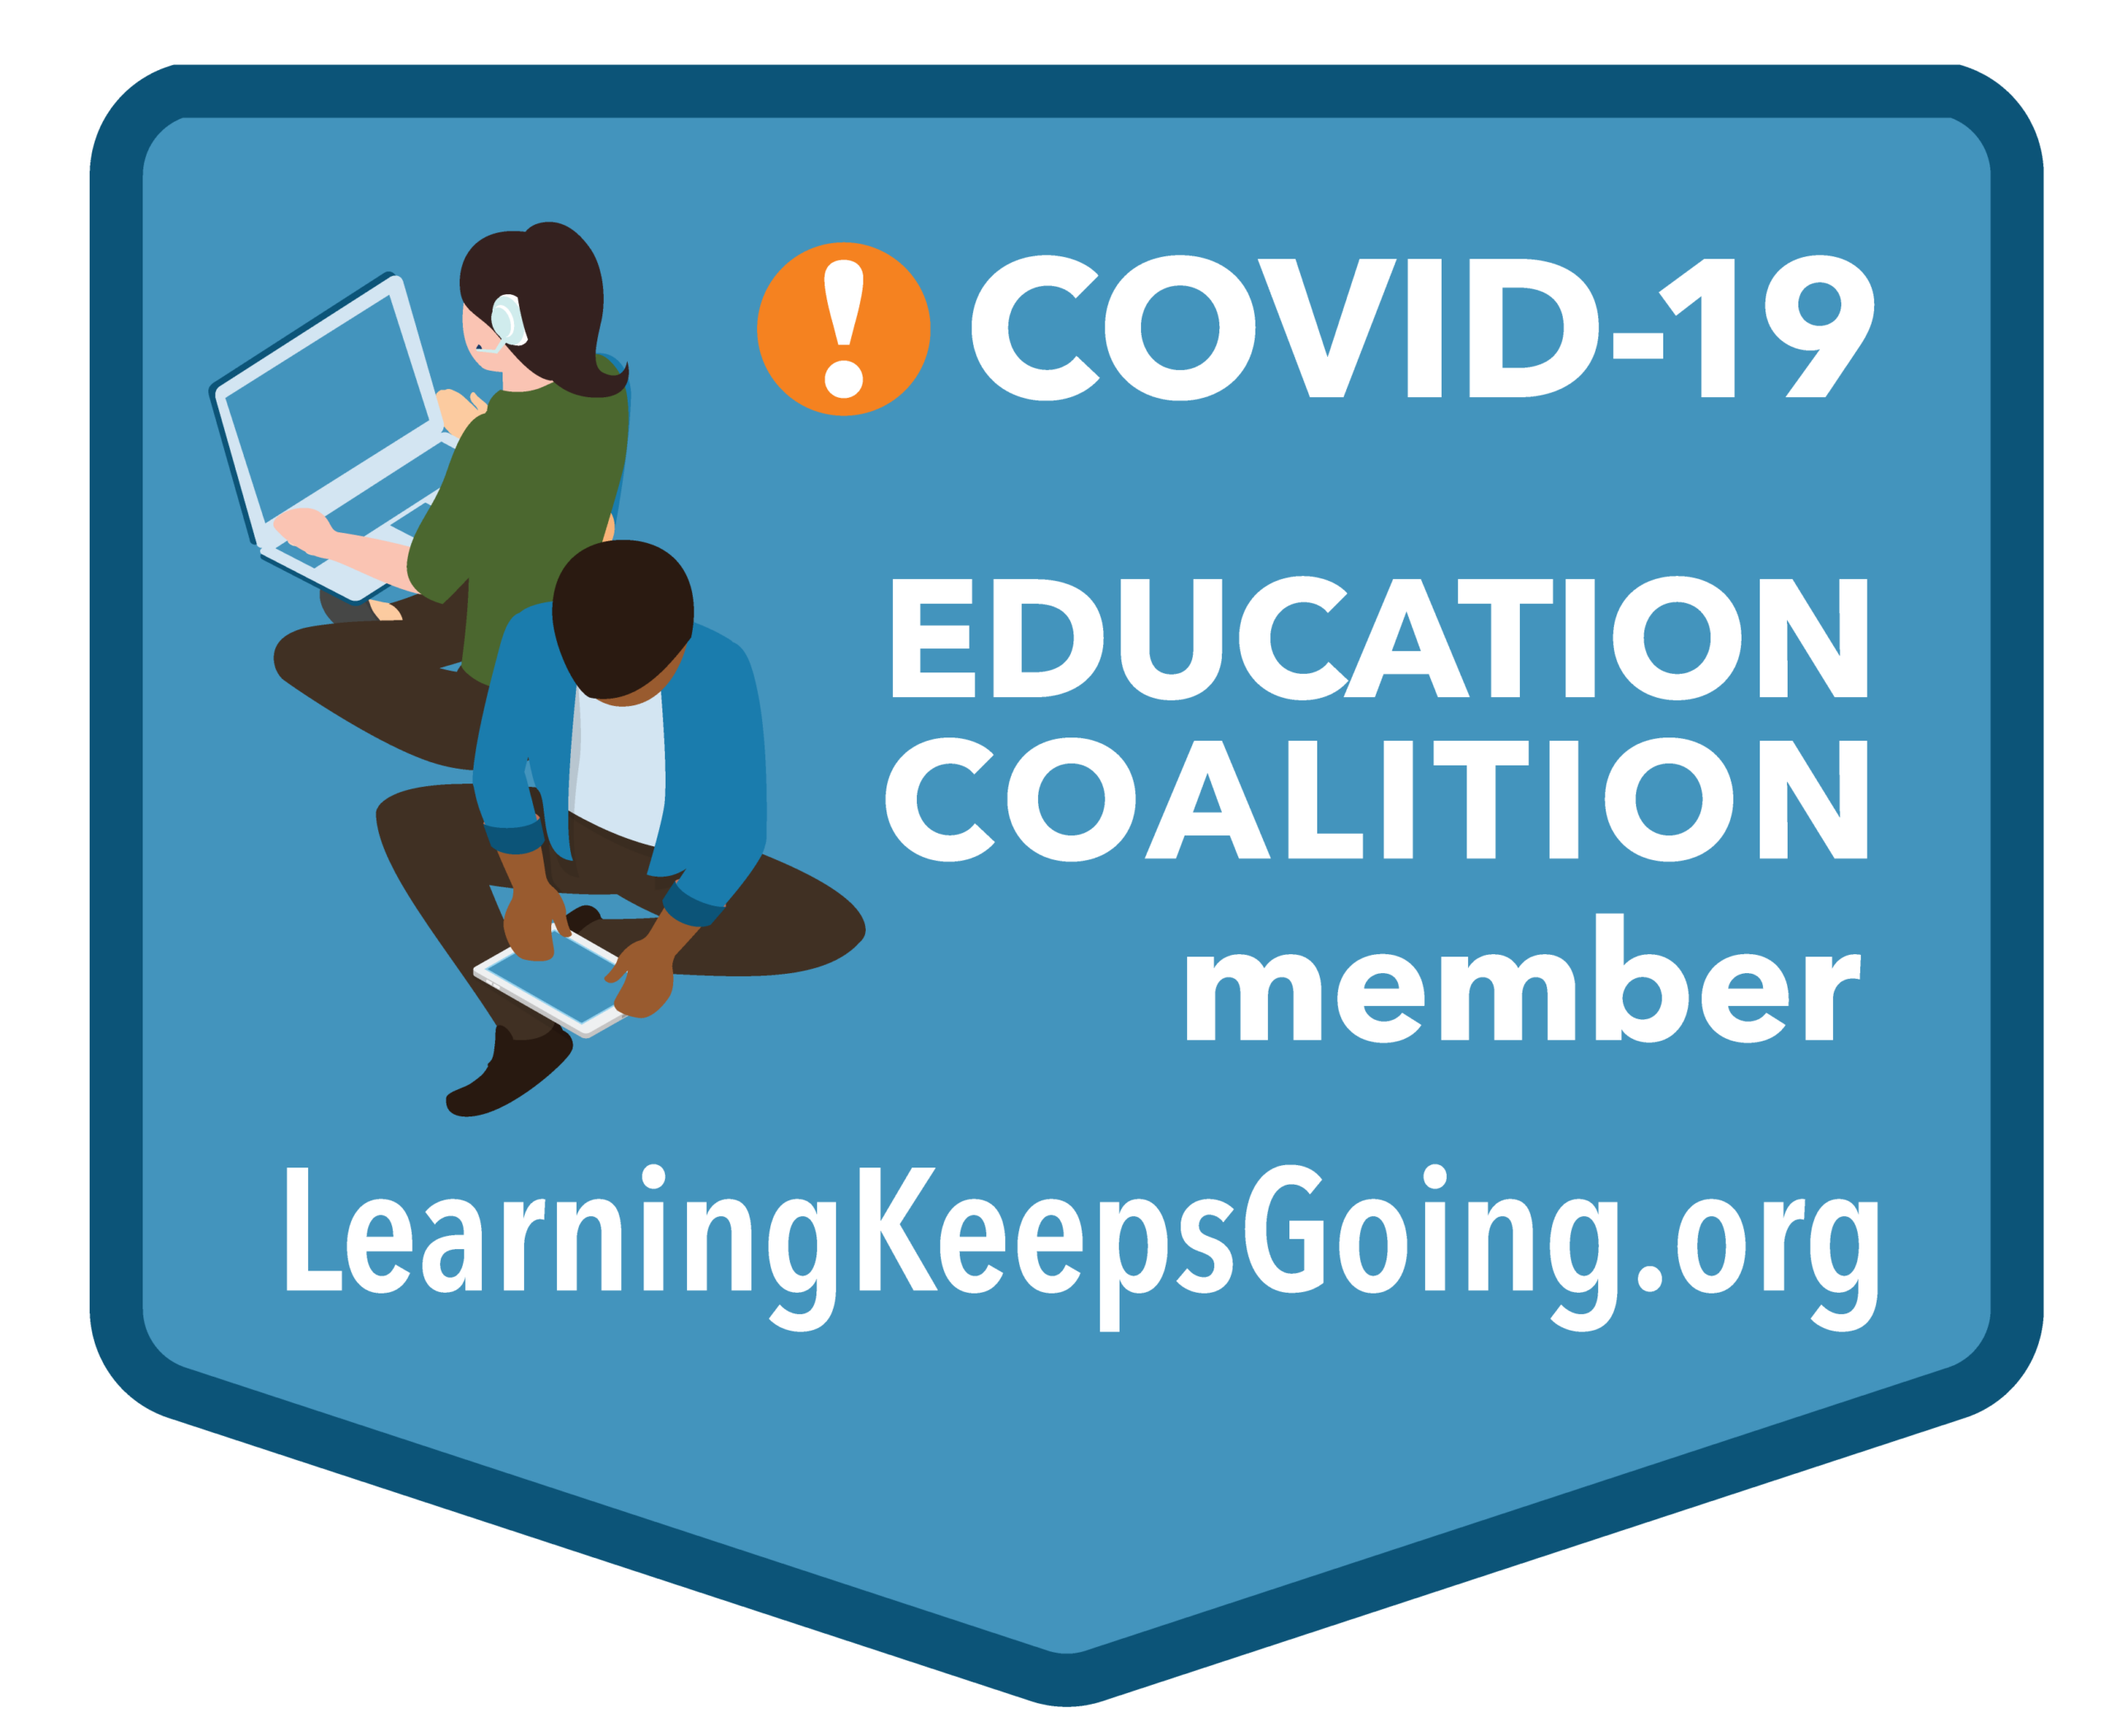 COVID-19 Education Coalition member